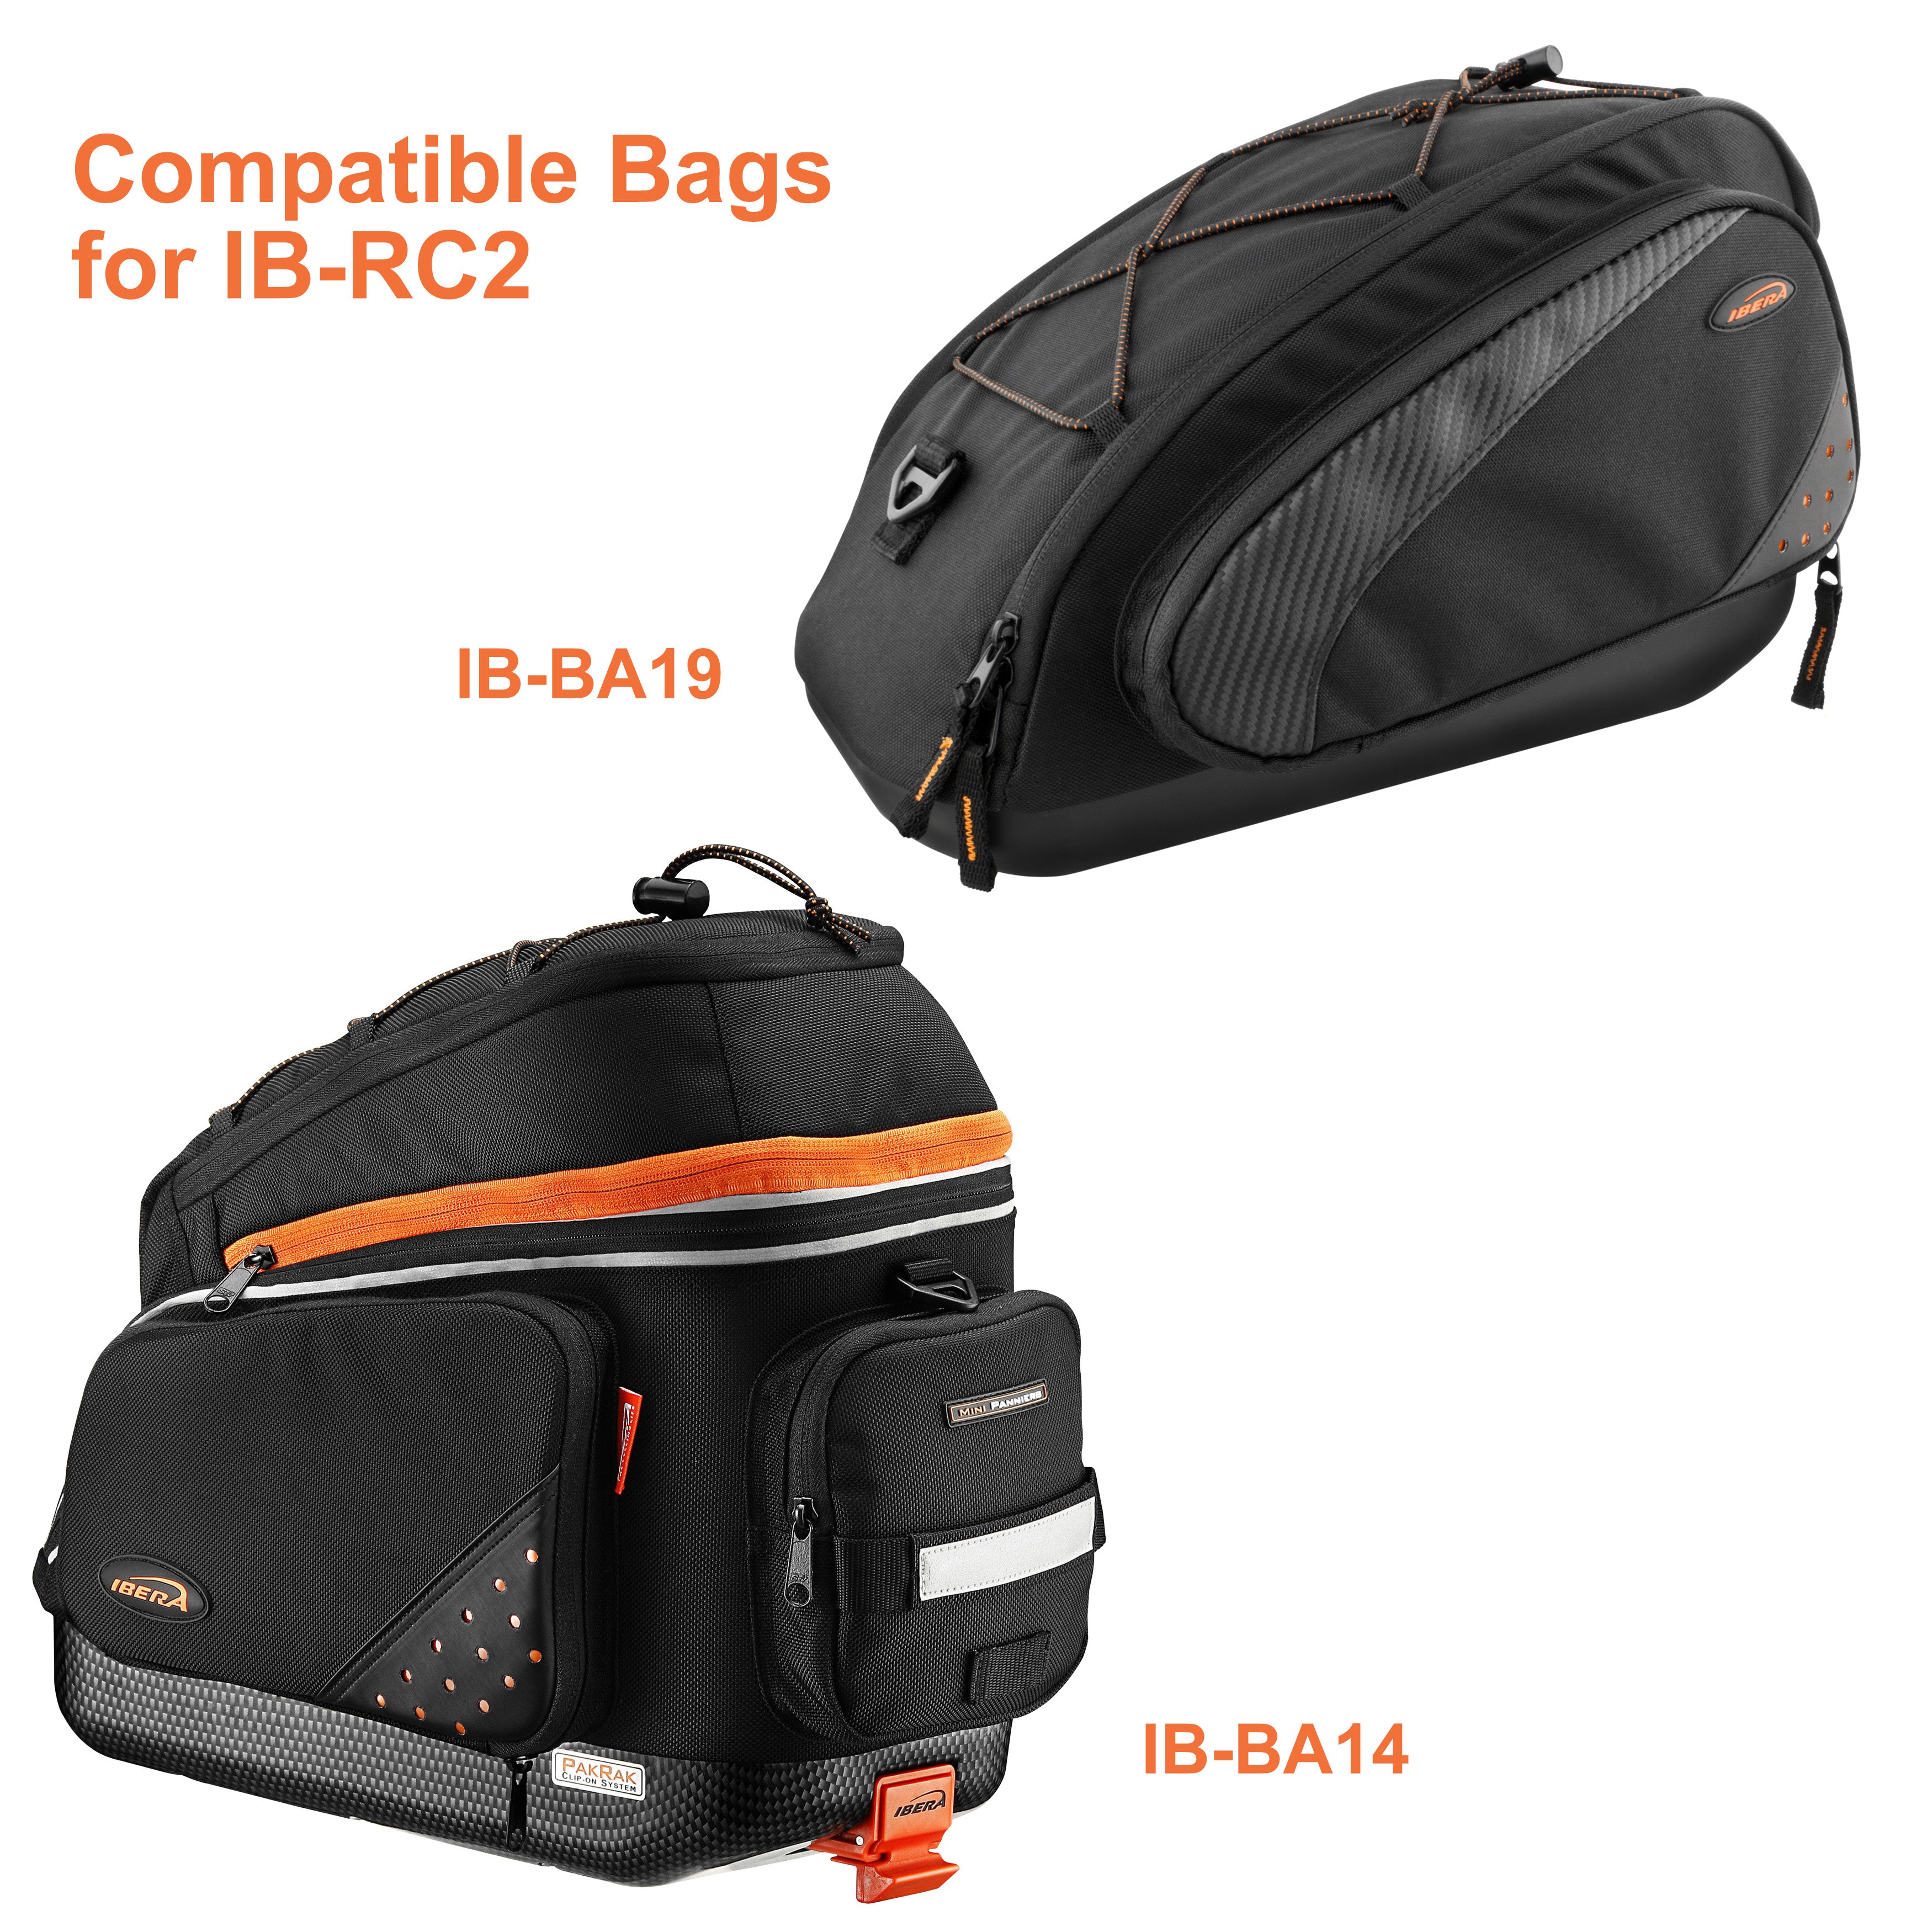 Bag Compatibility